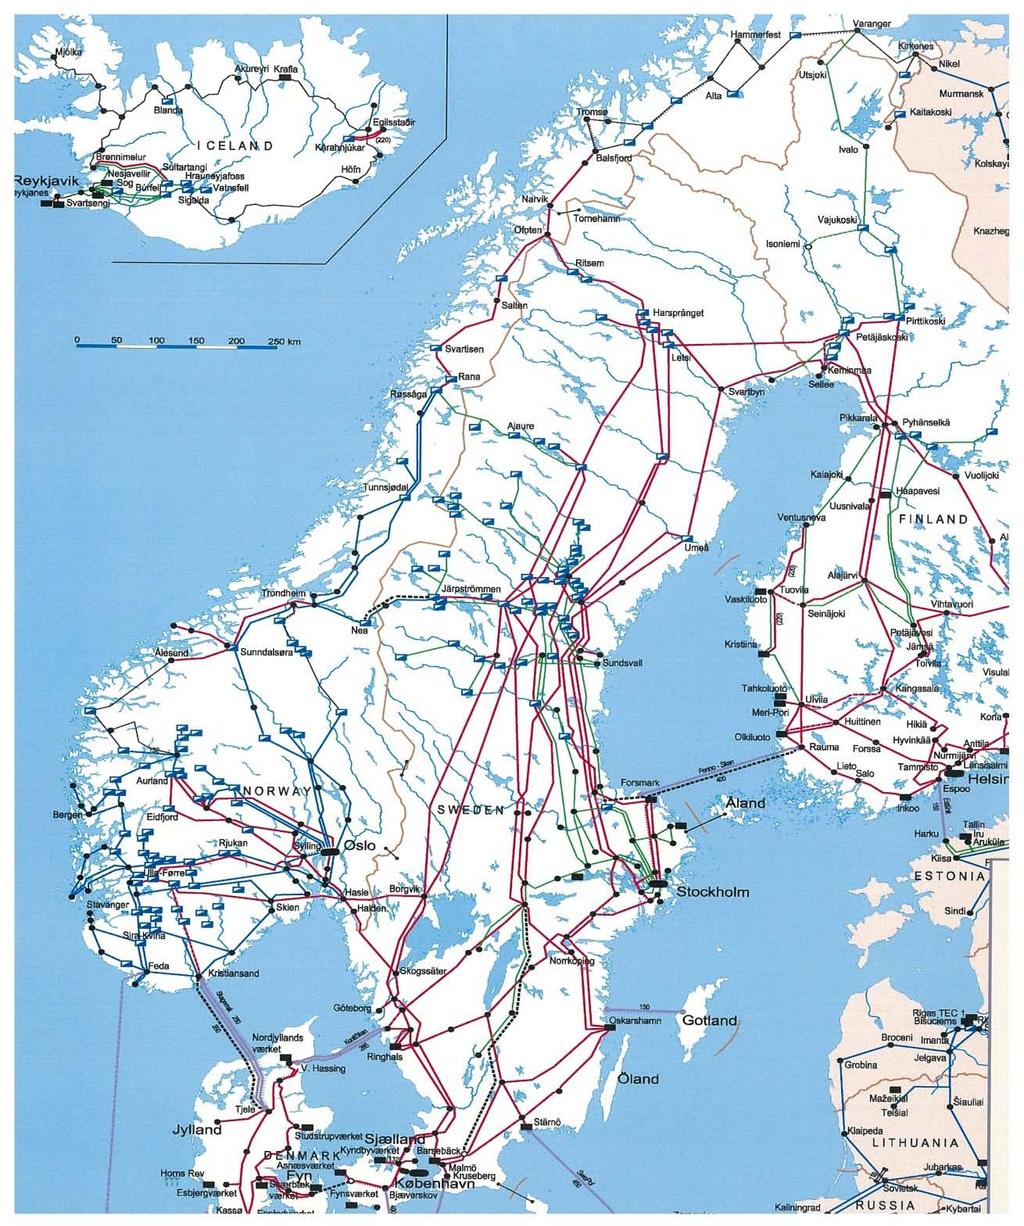 The Nordic Power system Norway (TSO Statnett):